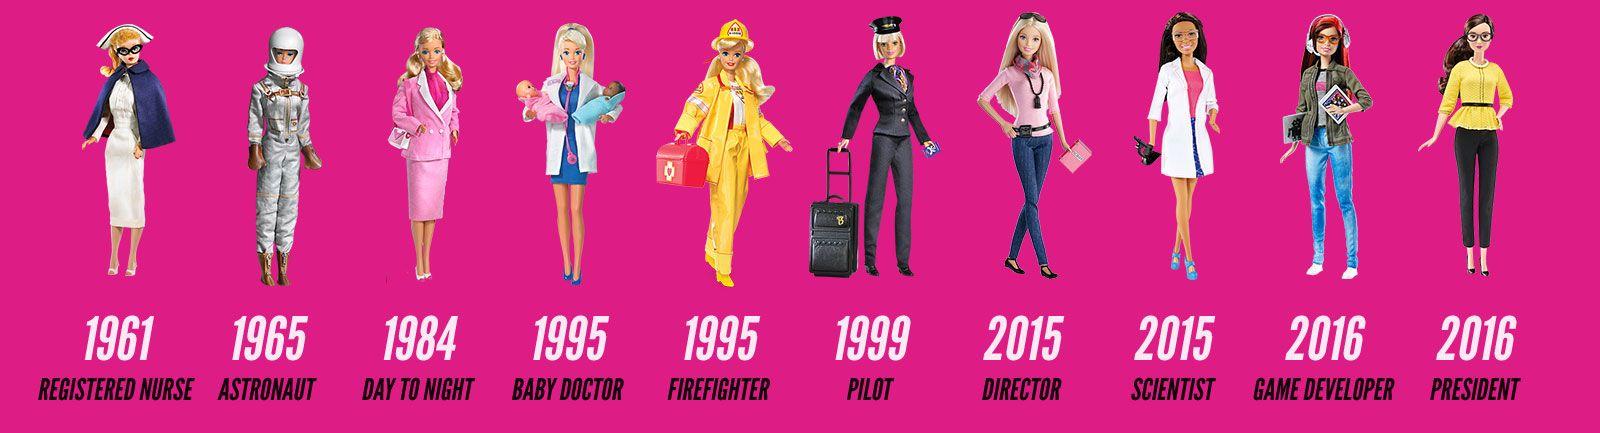 Barbie 2017 Logo - The History Of Barbie | Barbie